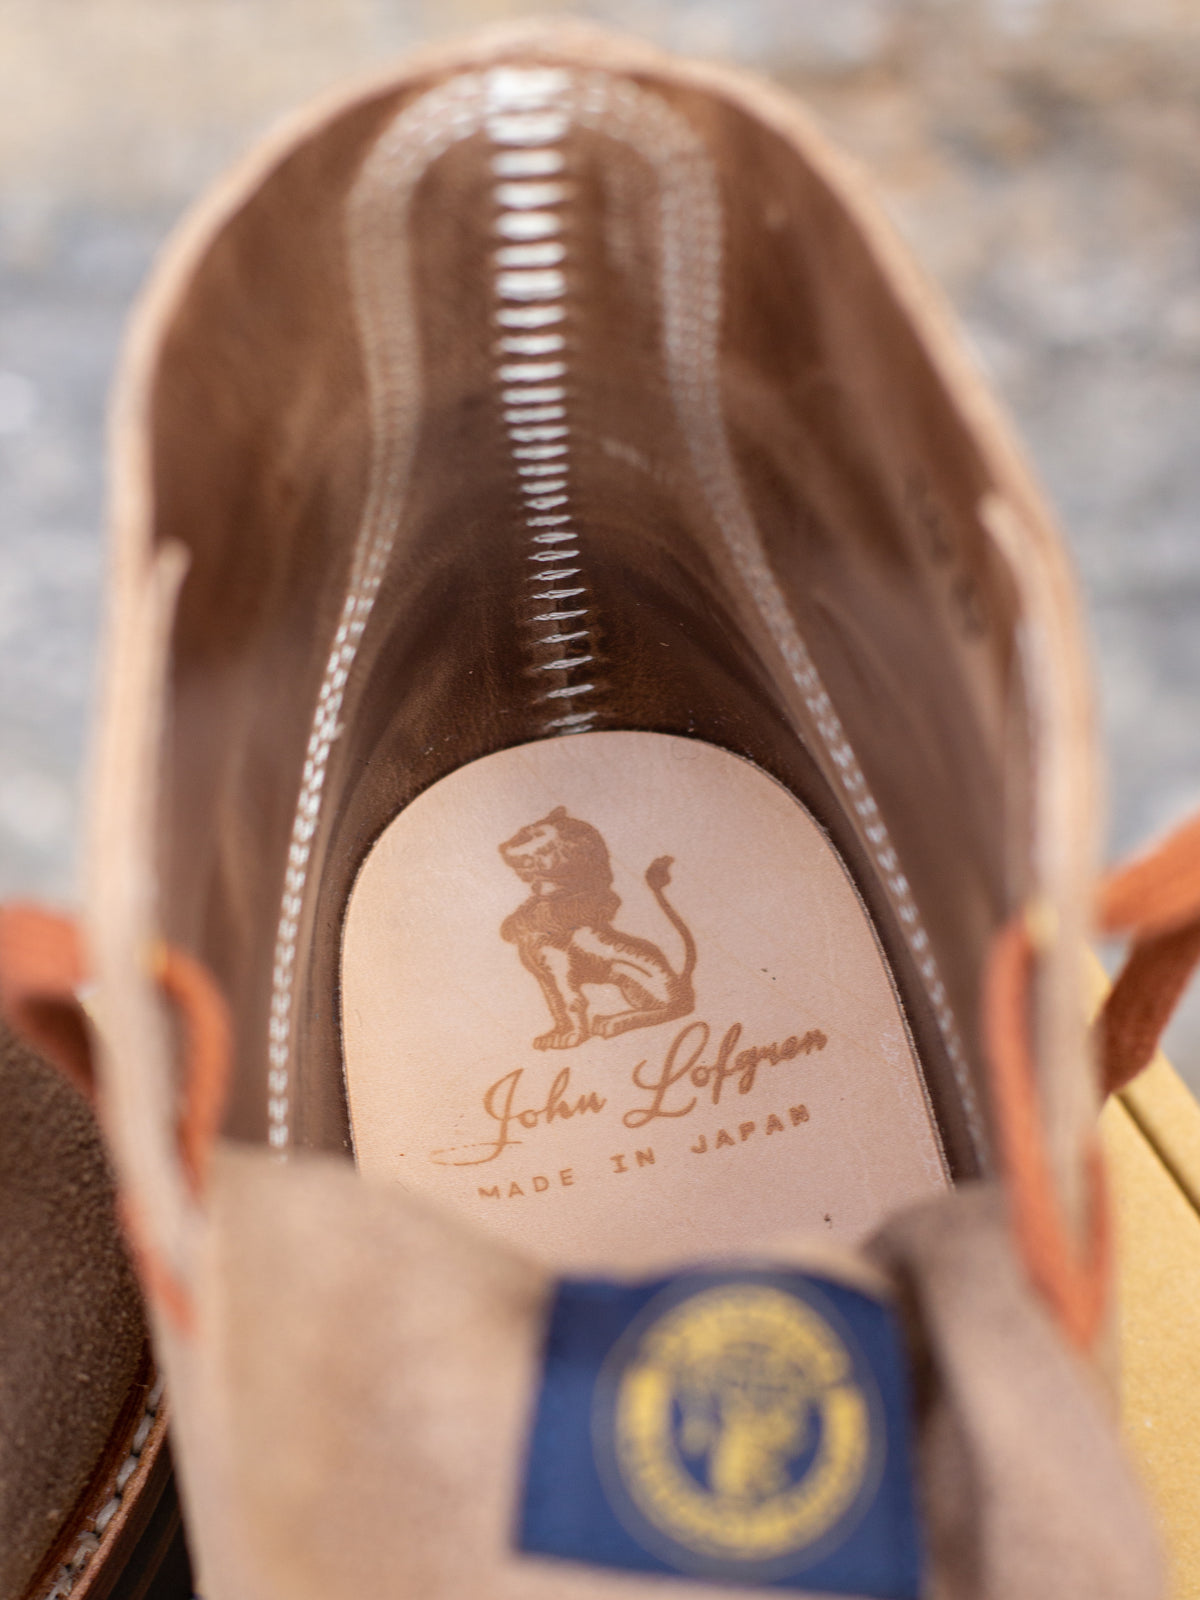 John Lofgren M-43 Service Shoes / Horween leather CXL Natural (LK-017)